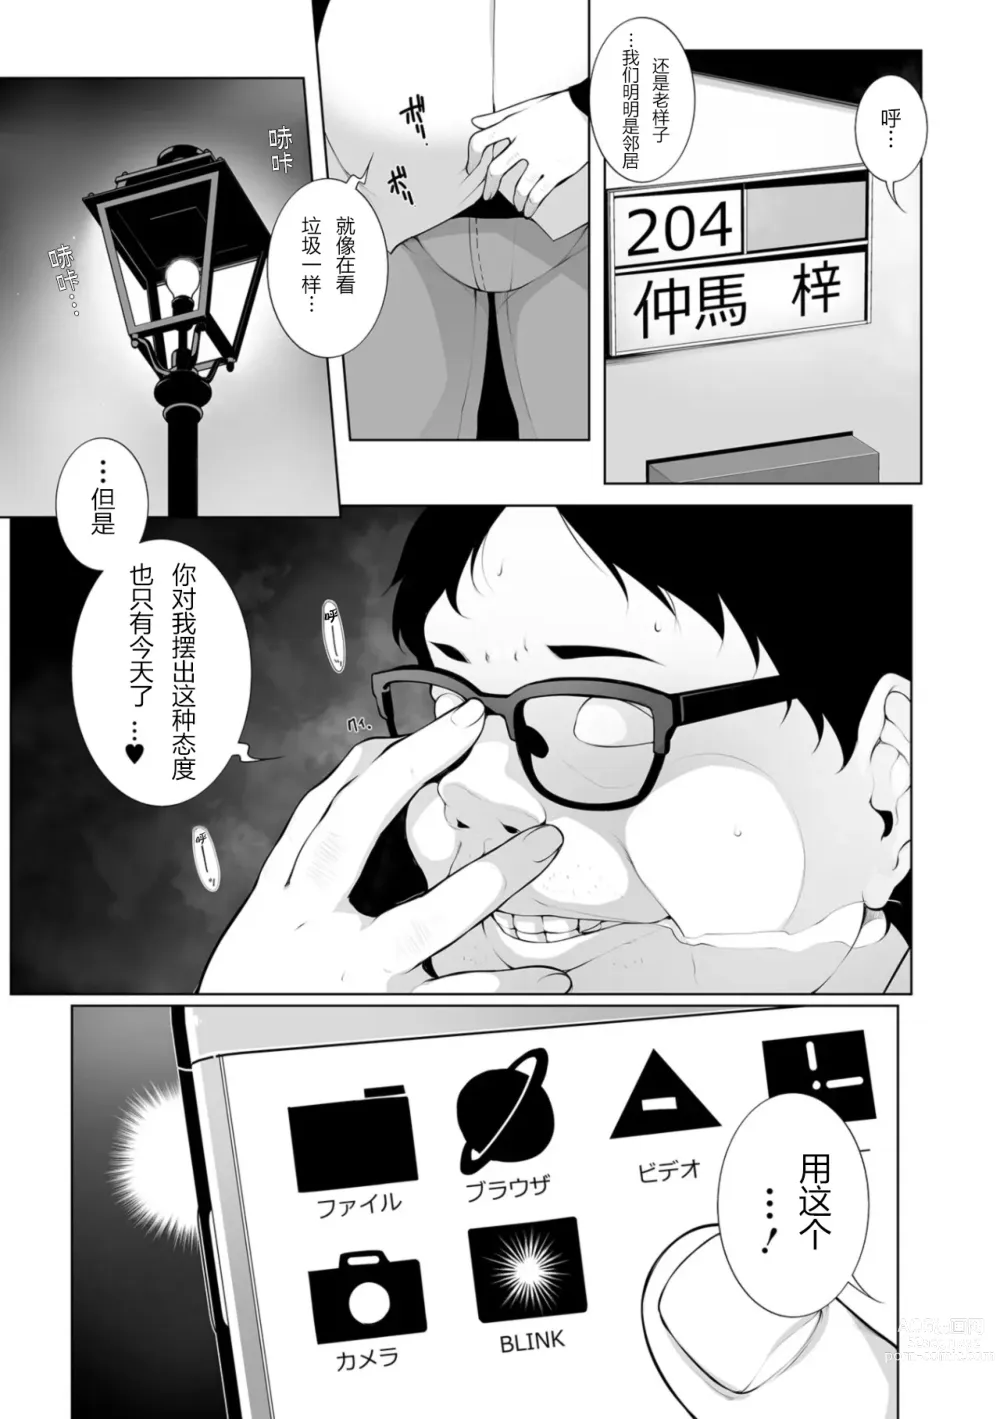 Page 7 of manga HYPNO BLINK FULL